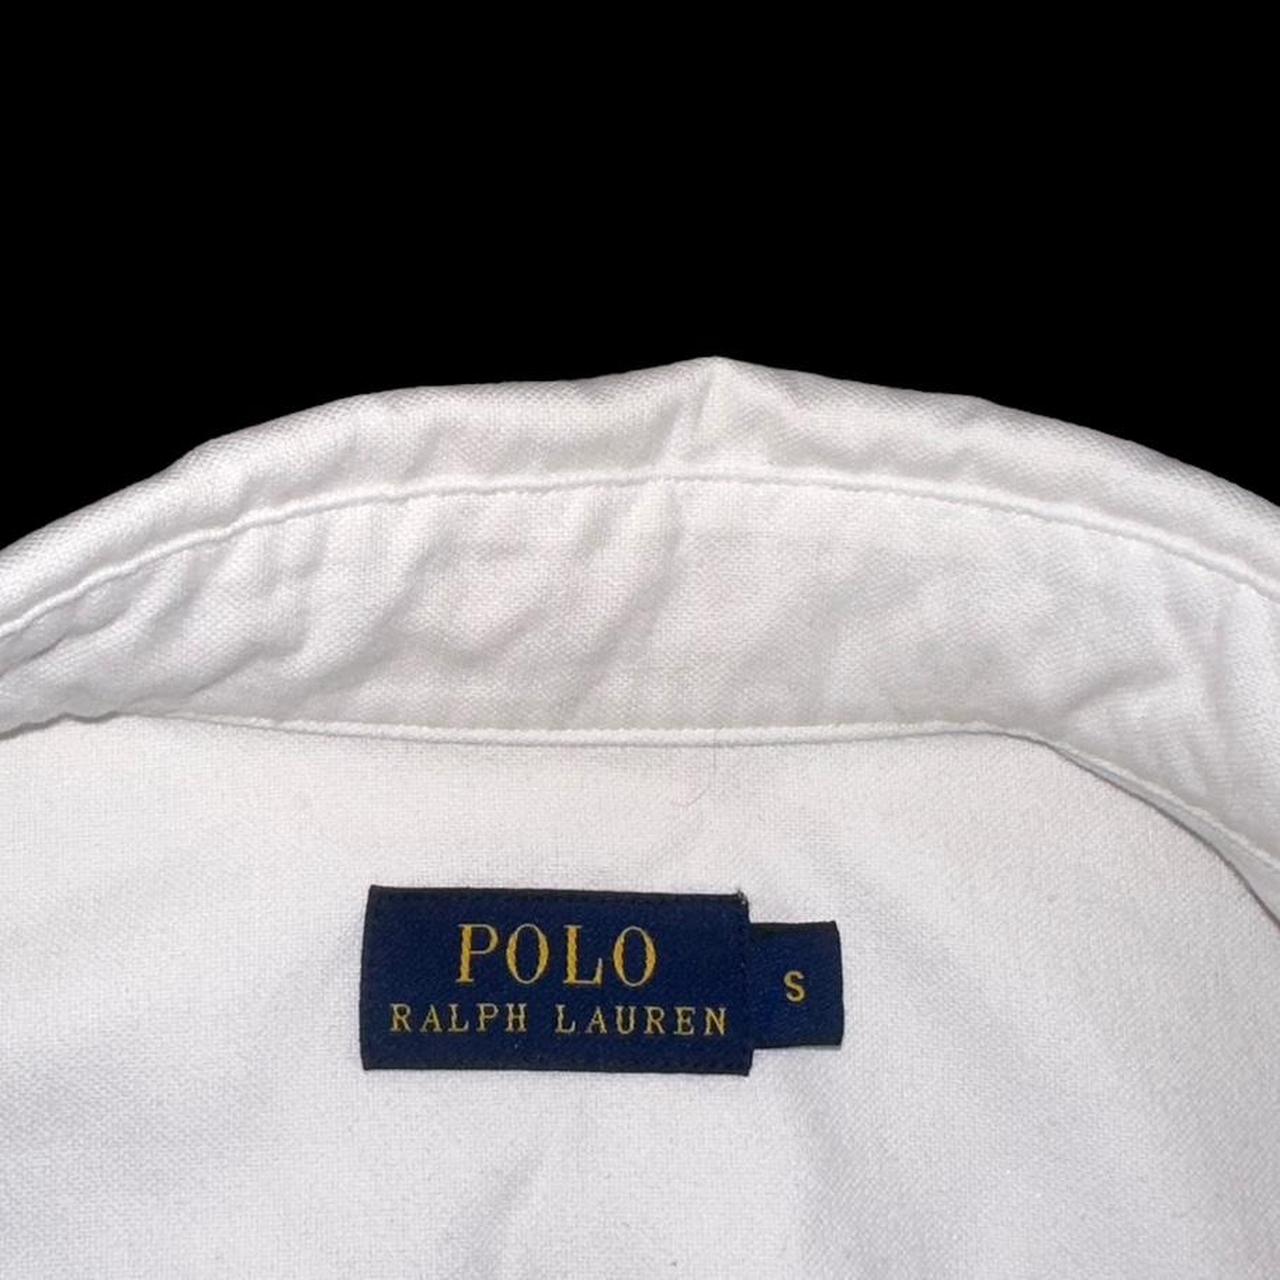 Vintage 90s Polo Ralph Lauren unisex monogram shirt